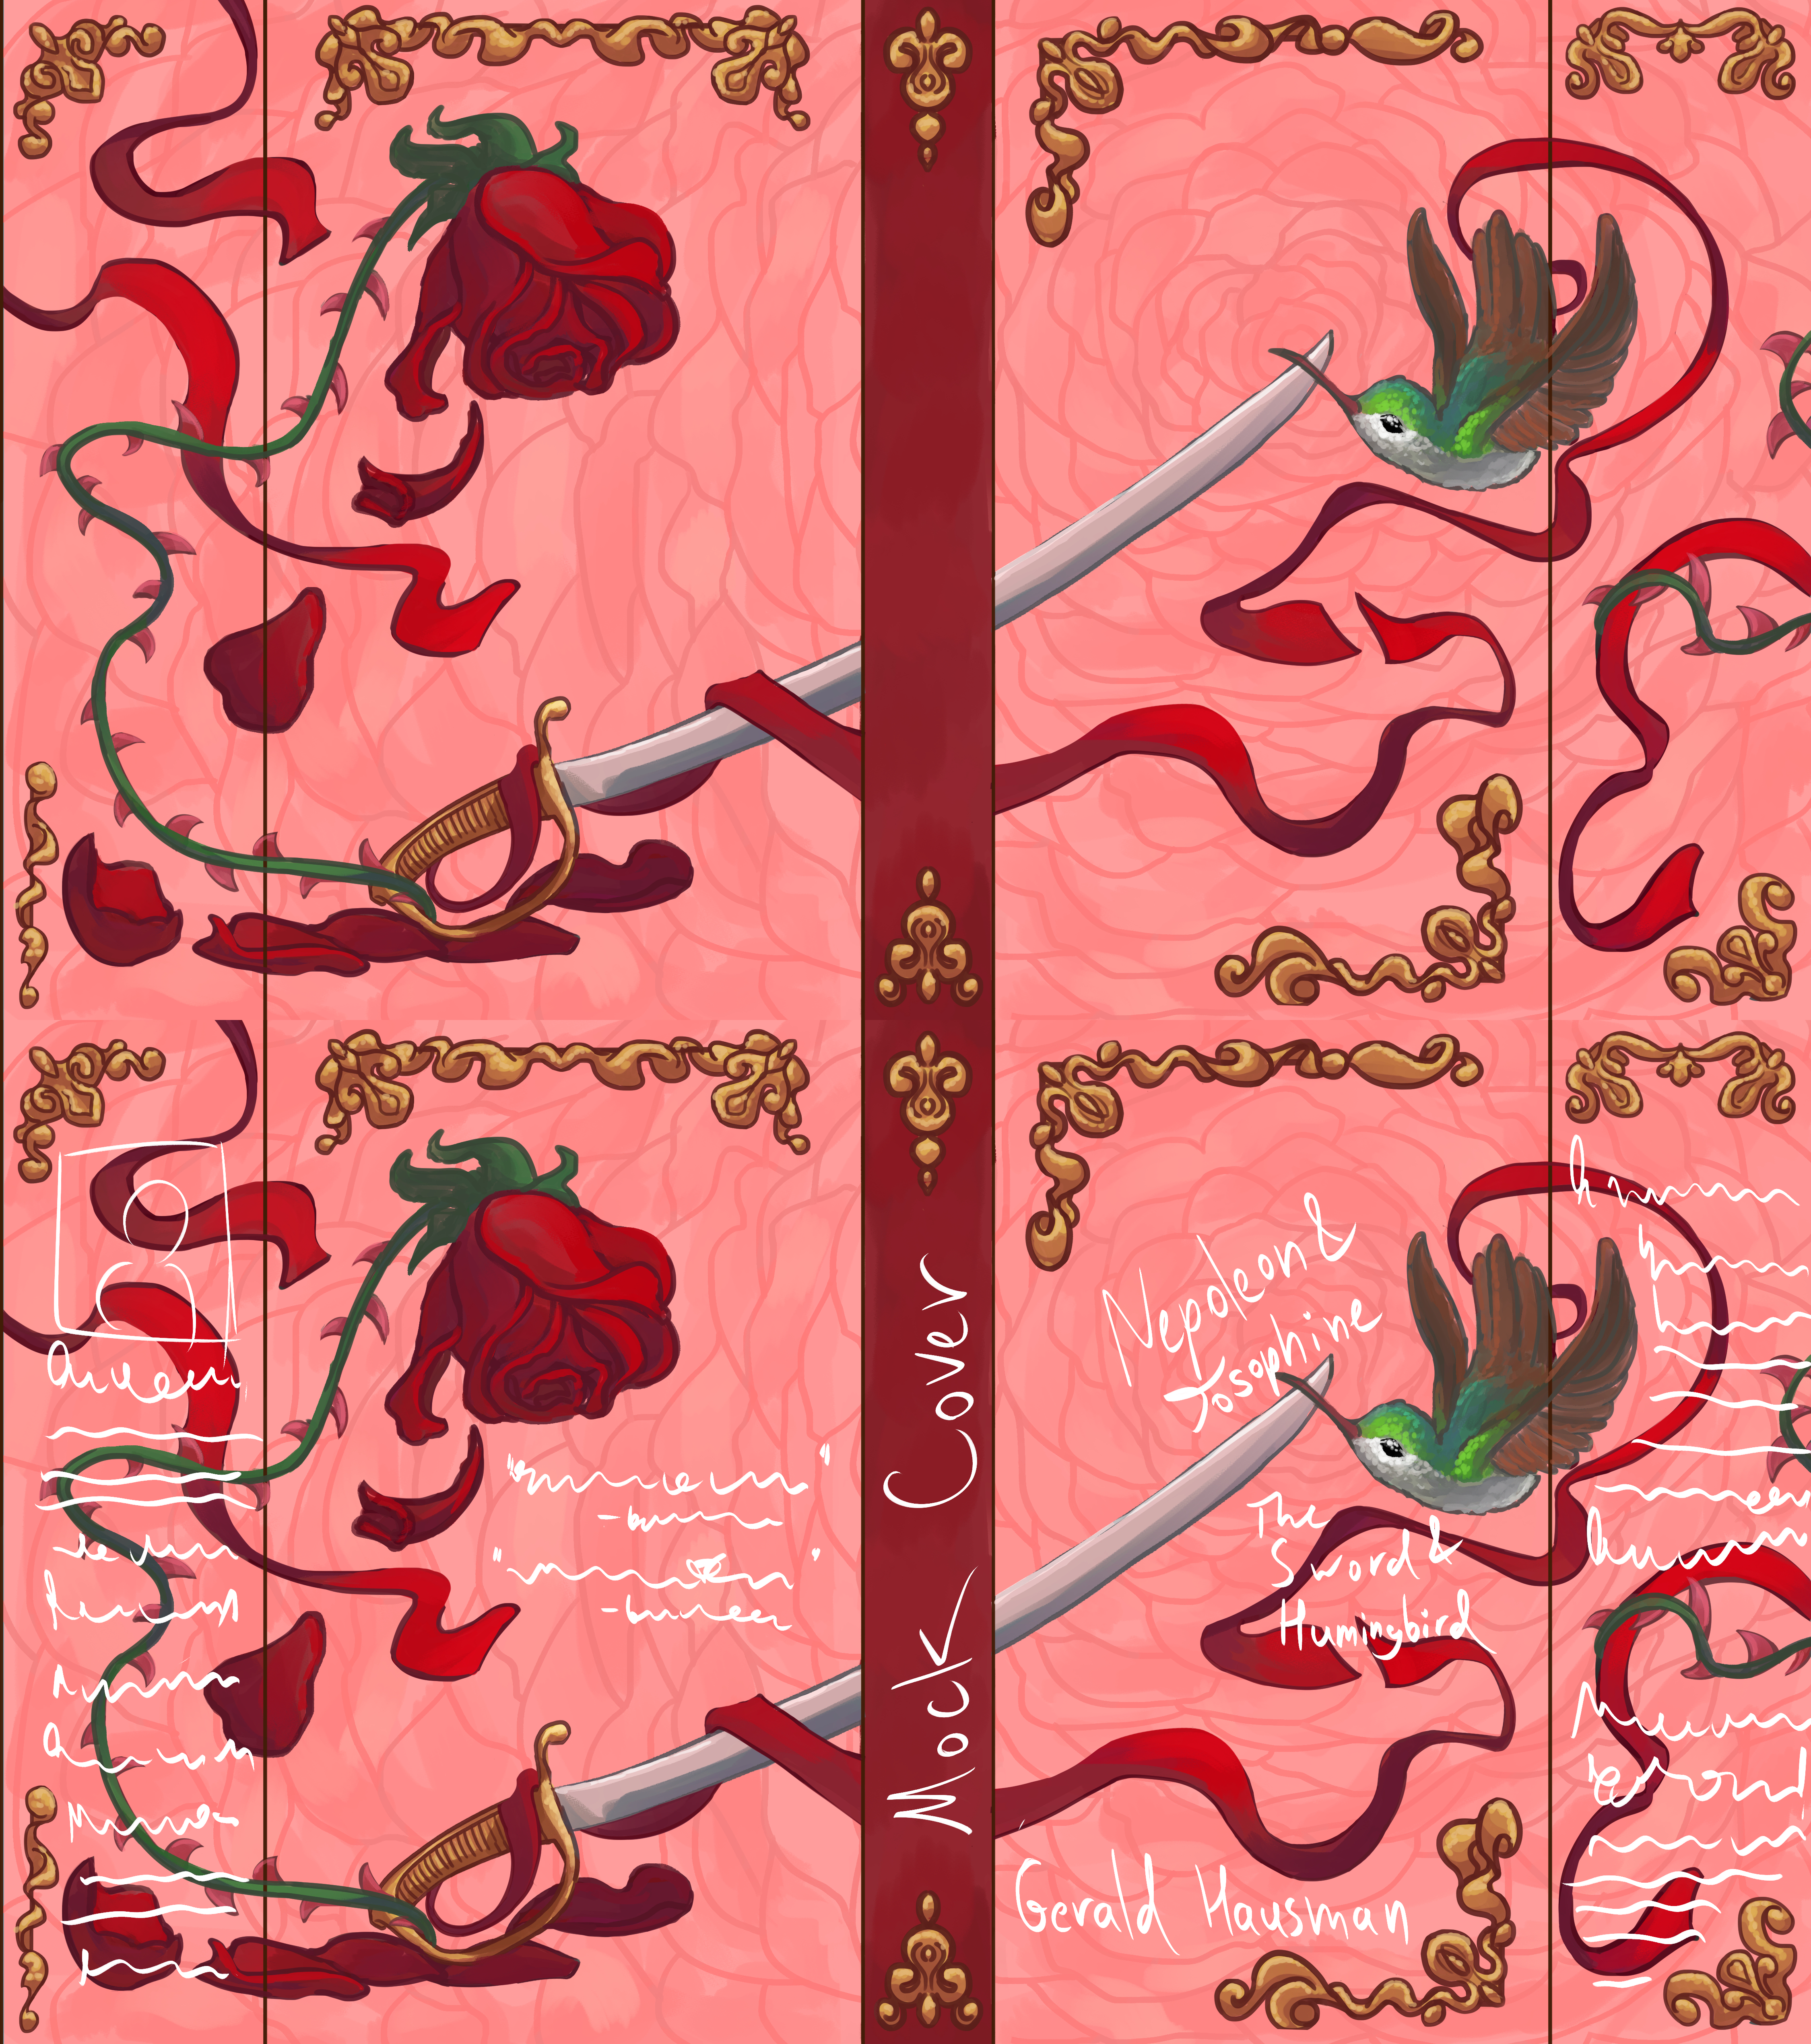 Napoleon & Josephine: The Sword And The Hummingbird - a novel by Gerald Hausman and Loretta Hausman - wrap around cover illustration